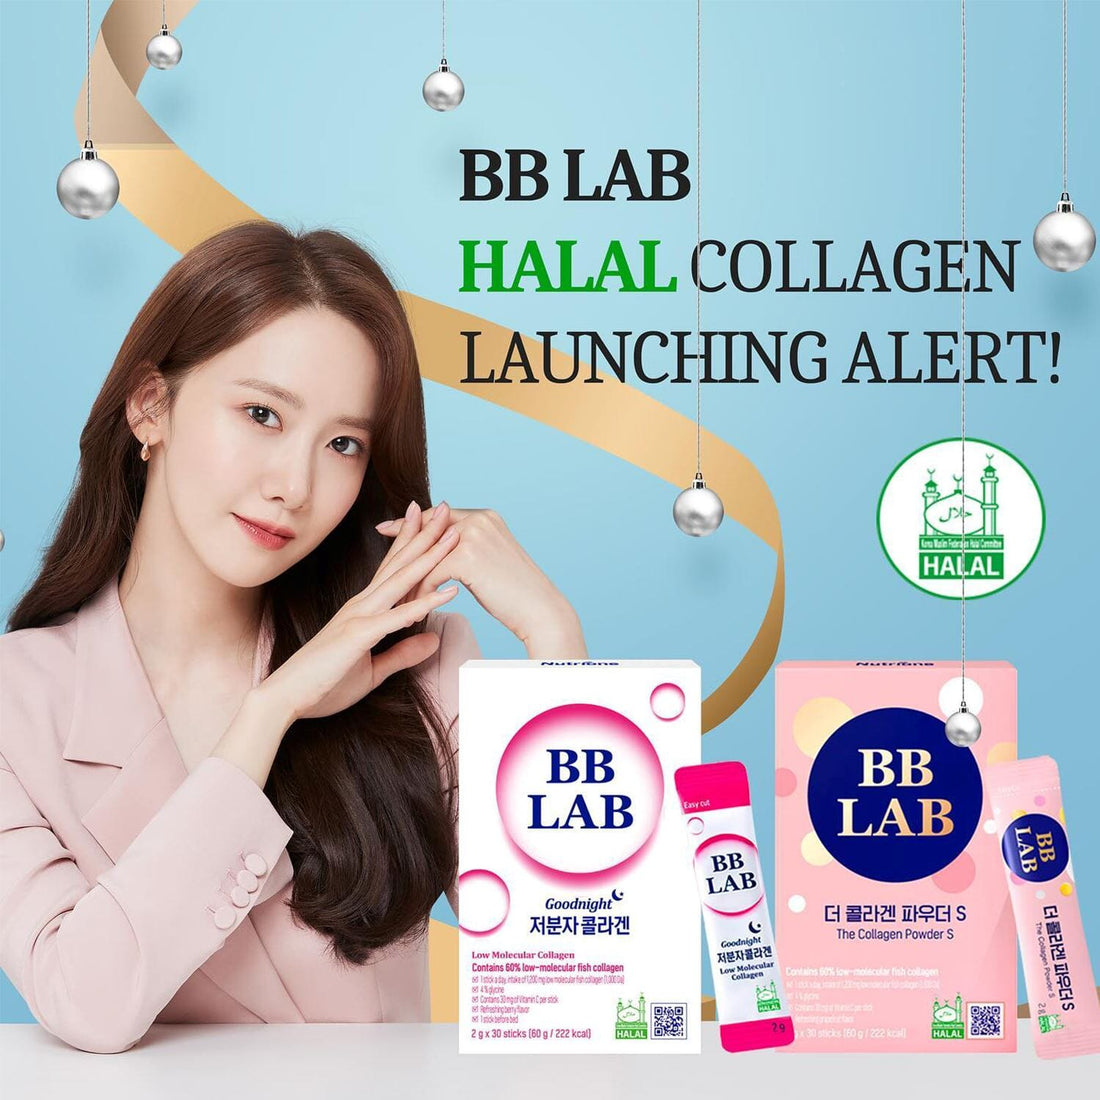 BB Lab [HALAL] renewal the Collagen powder S 2g/30ea Lifestyle BB LAB ORION XO Sri Lanka